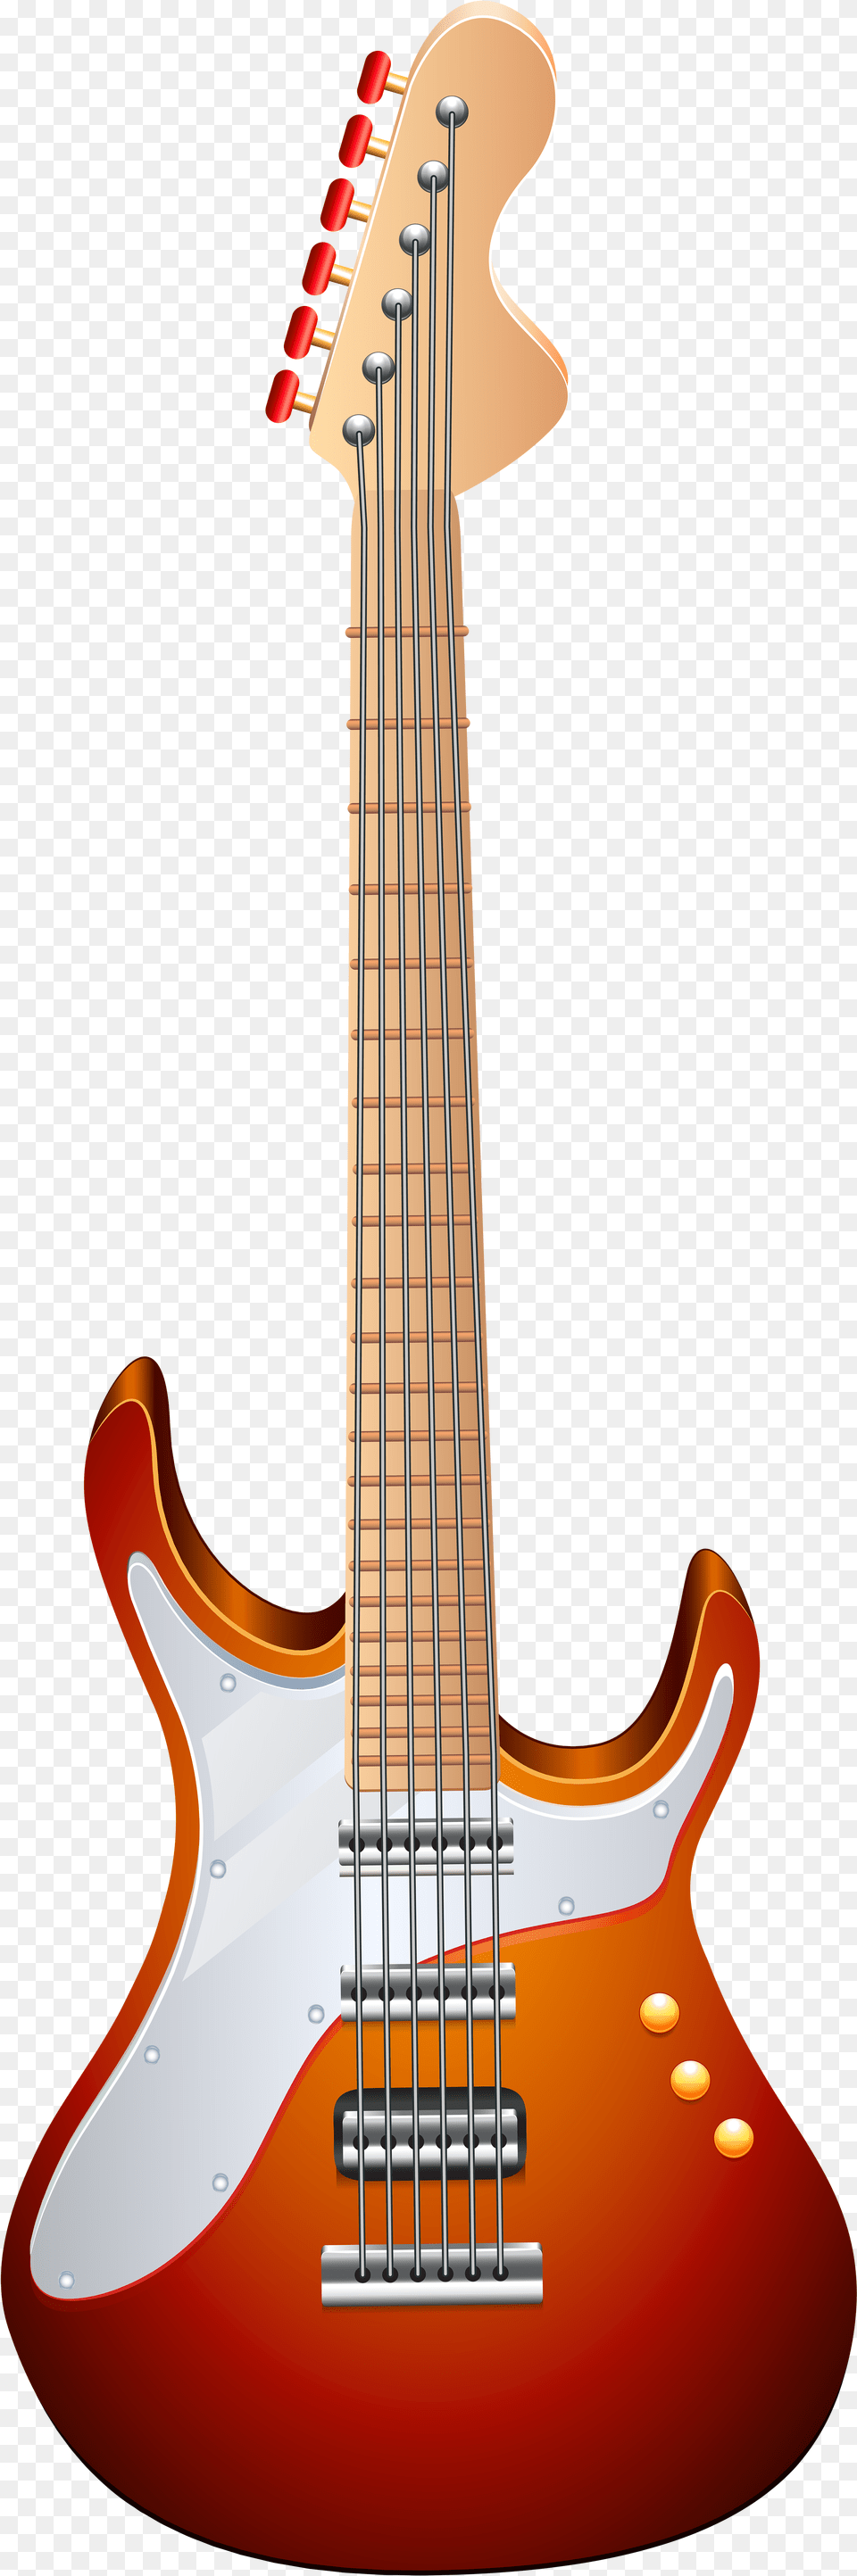 Guitar Clip Art Image Guitar Clipart Background, Bass Guitar, Musical Instrument Free Transparent Png